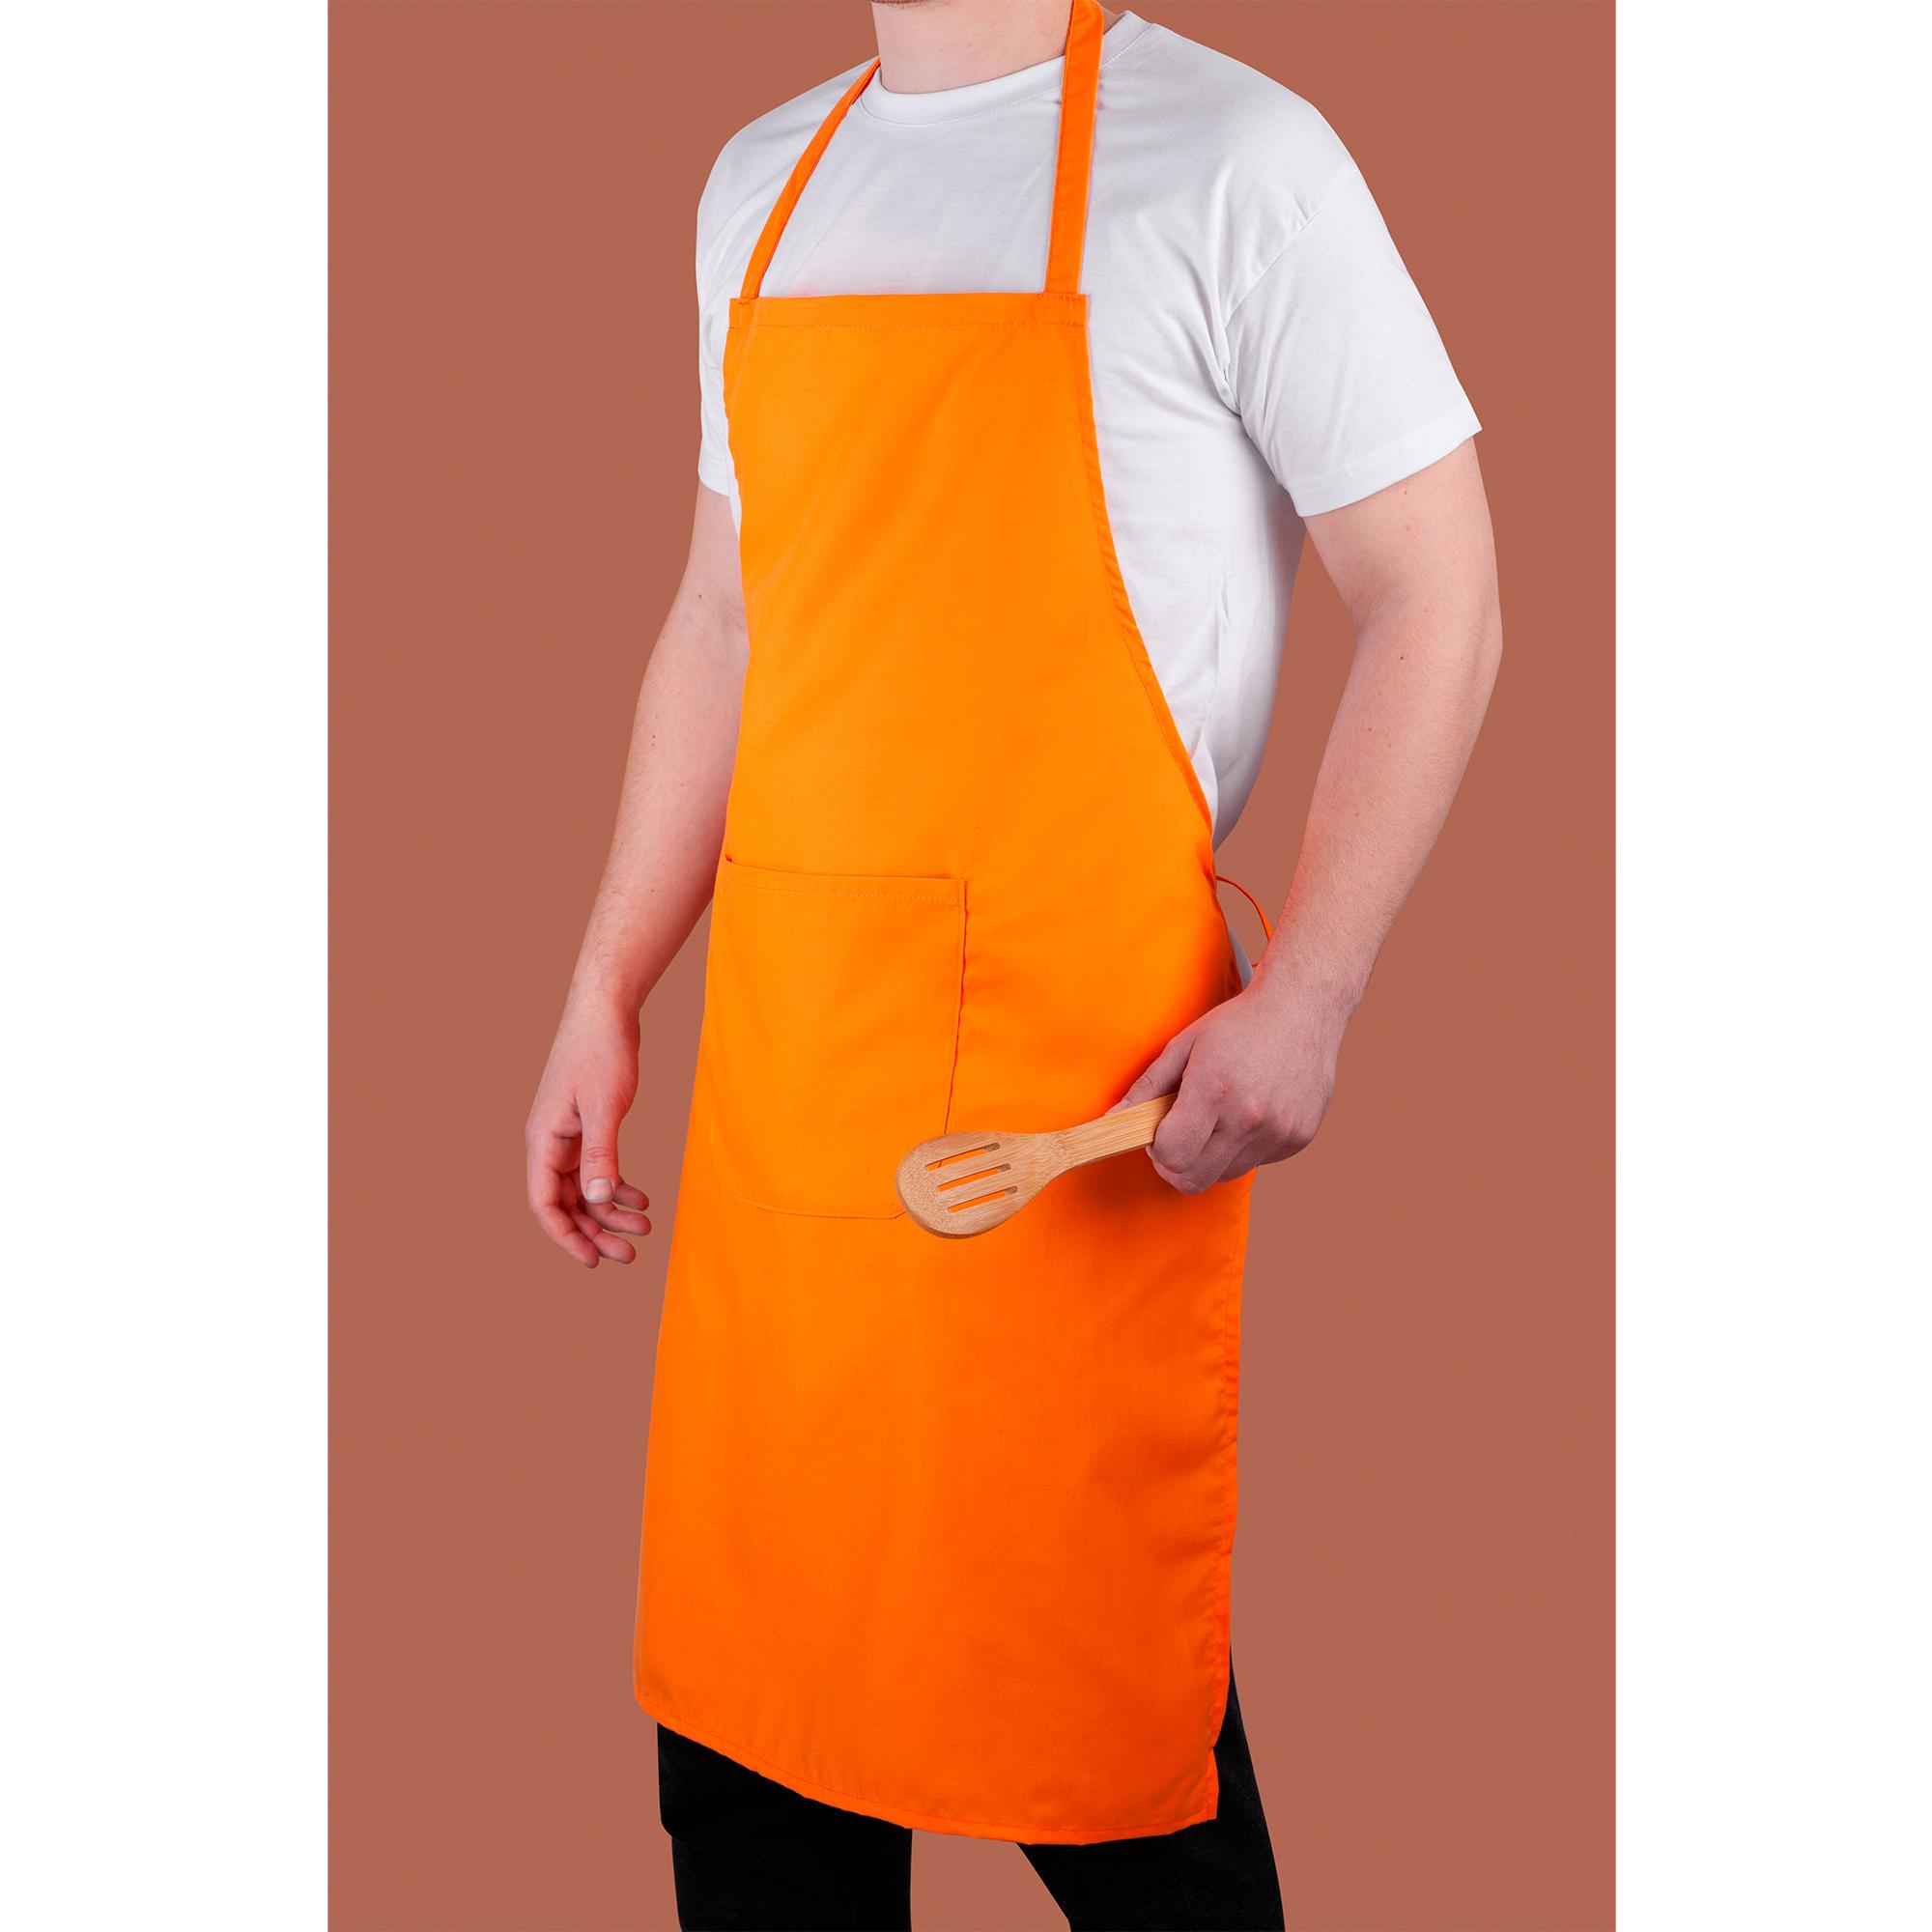 Фартук "Chef", цвет оранжевый, фото 1